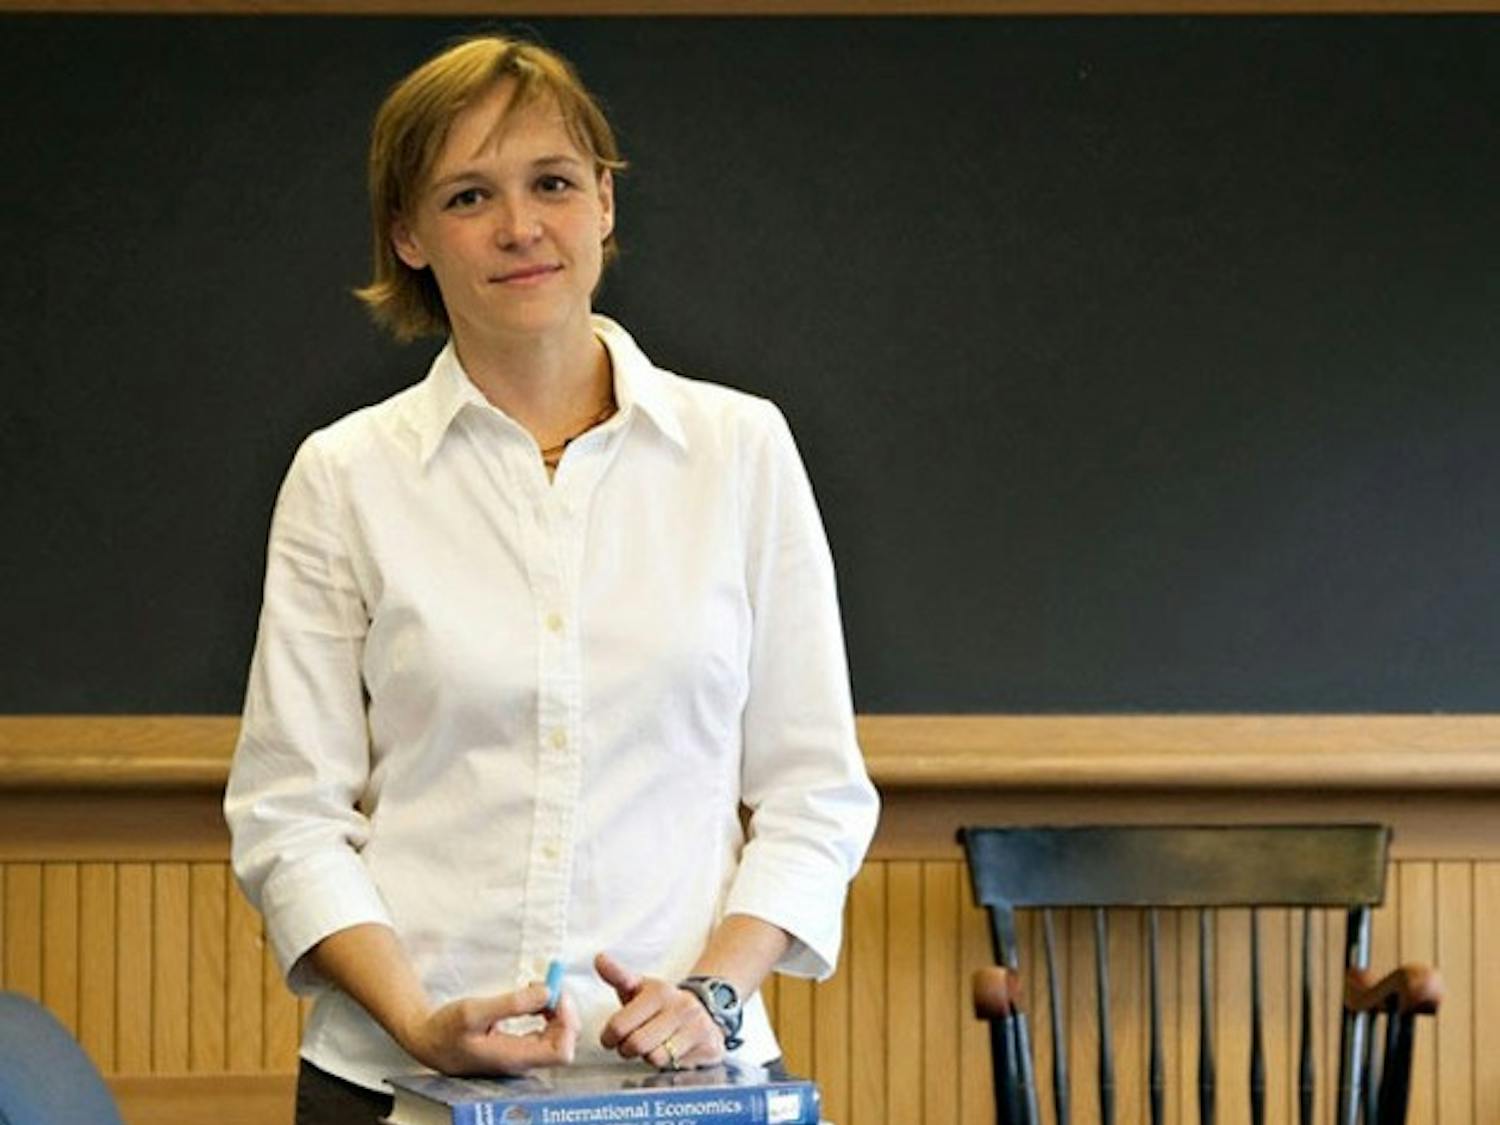 Economics professor Nina Pavcnik said she equally values teaching, researching and editing. 